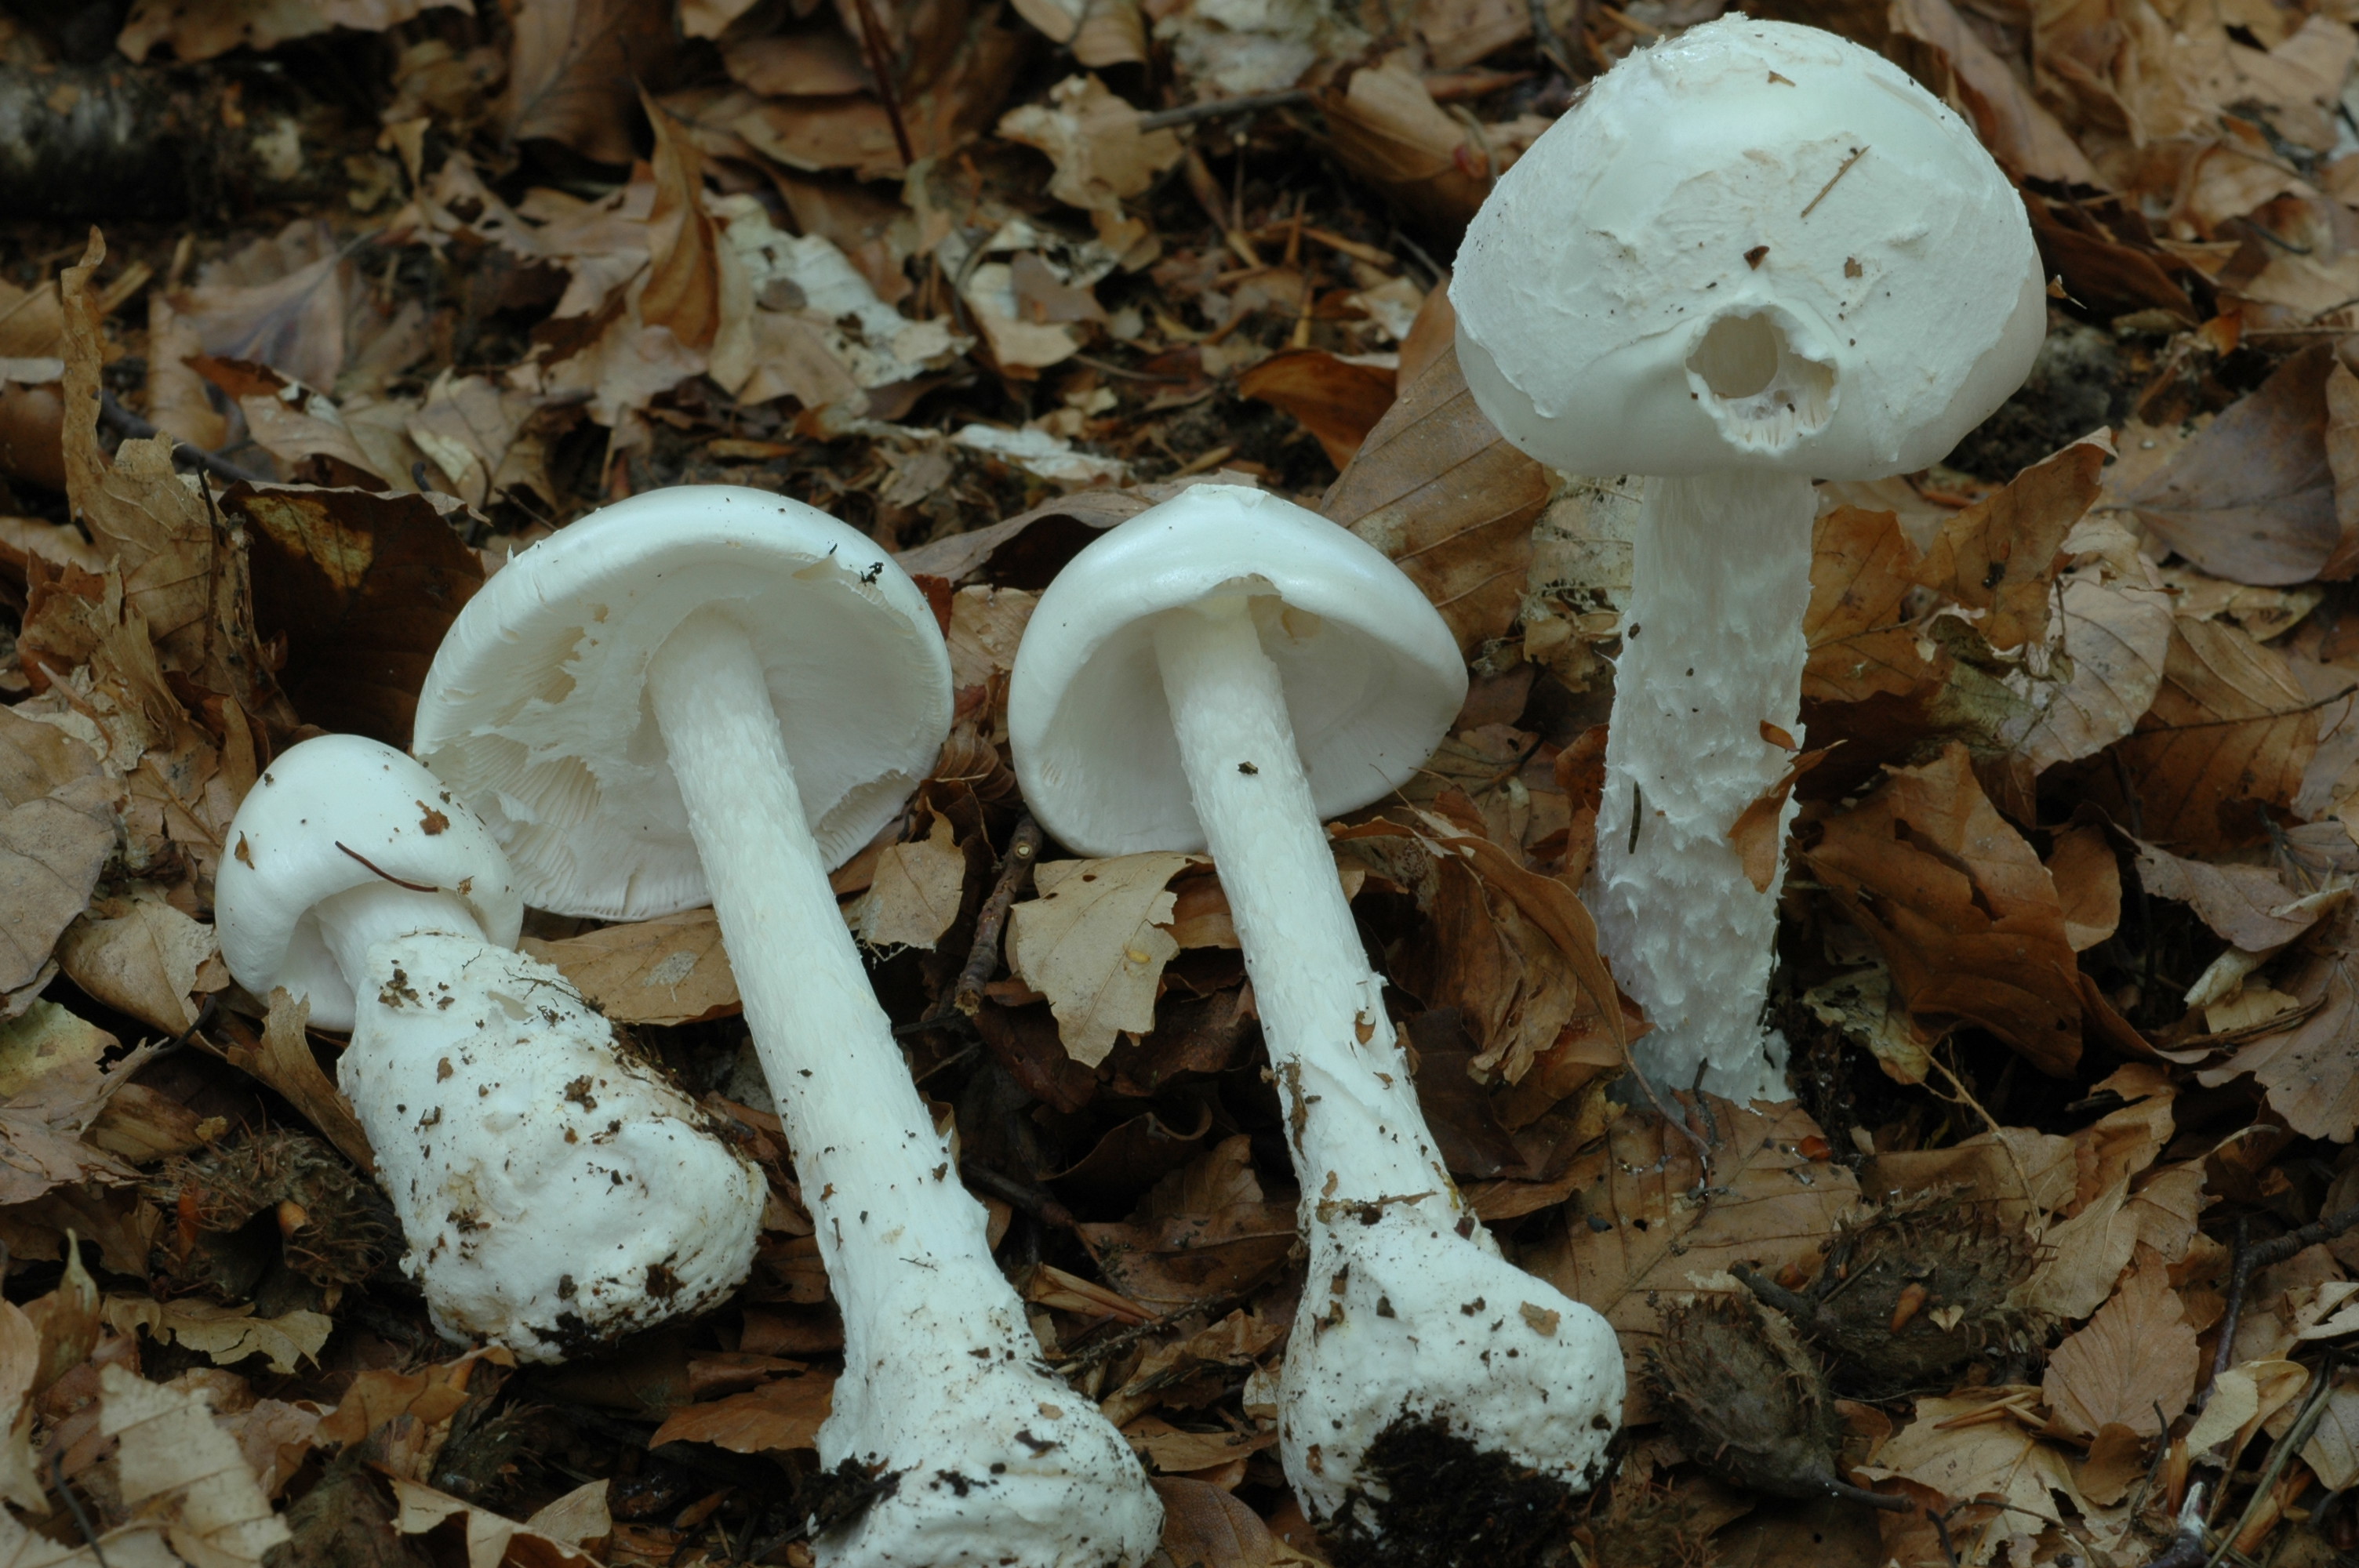 Destroying angel - white mushroom